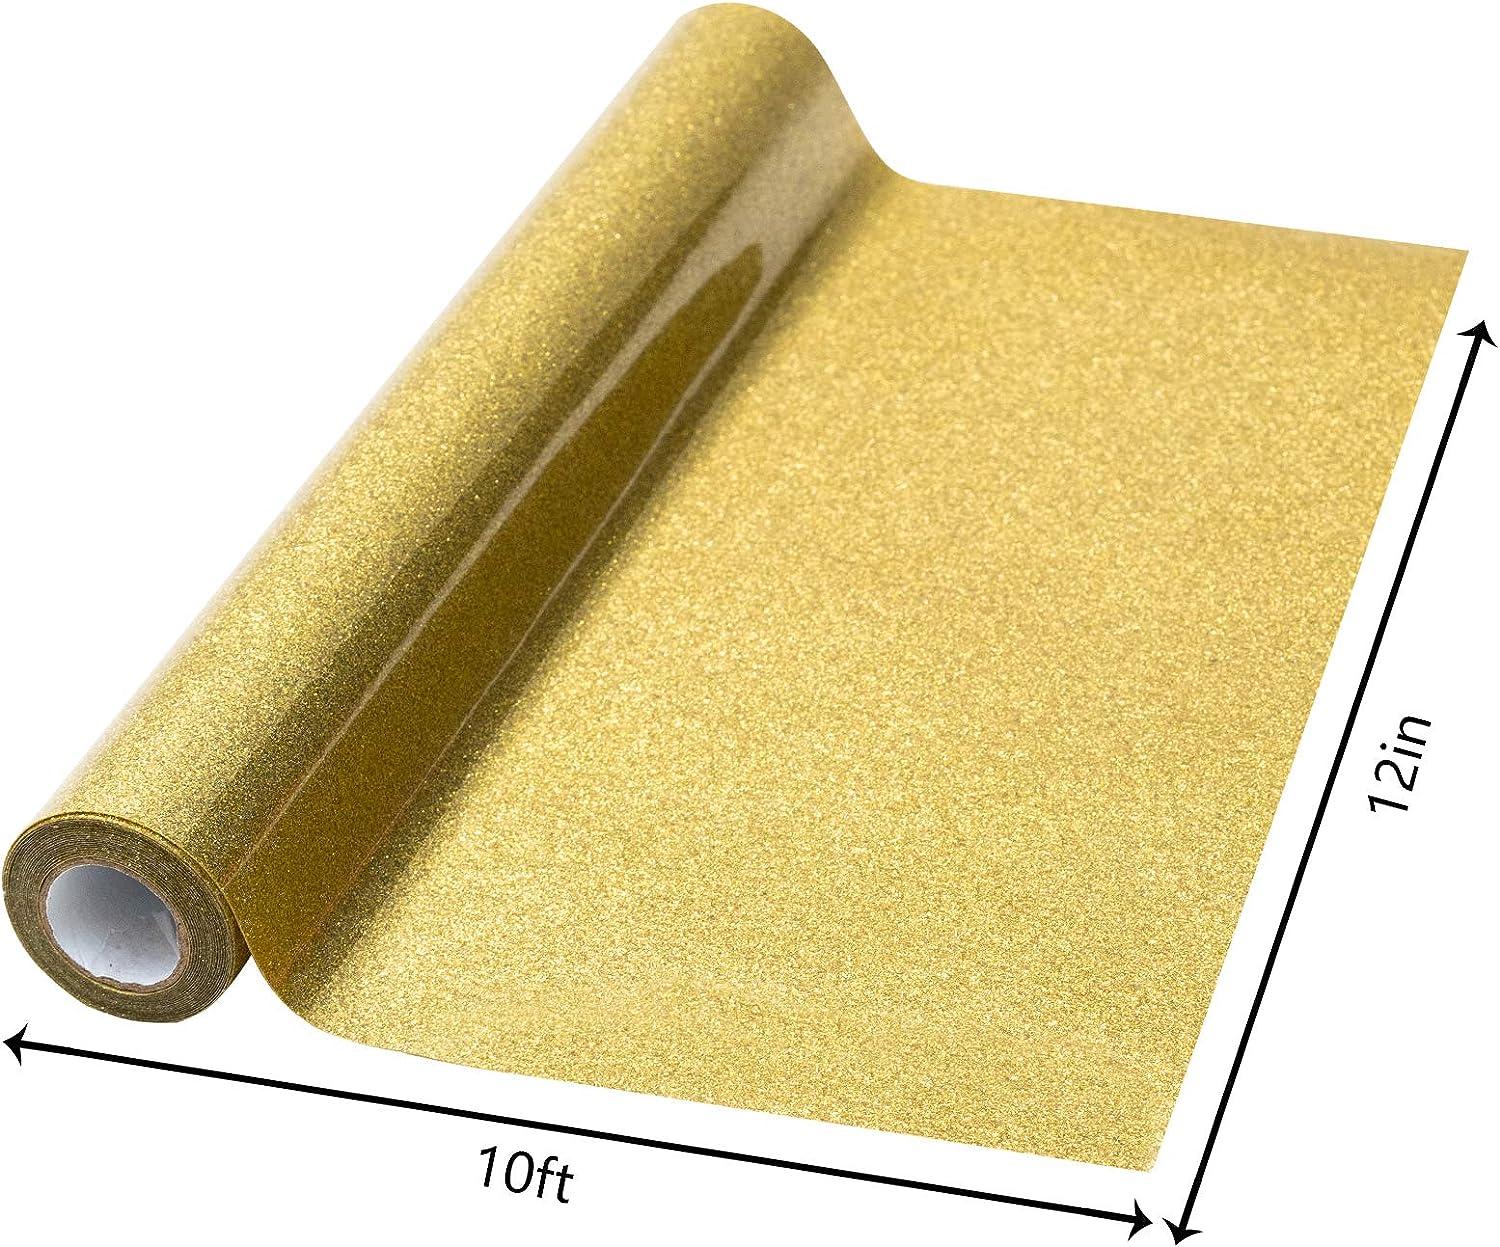  Jchen 1 Roll Glitter Sequin Sparkly Vinyl Heat Transfer Iron On  DIY Garment Film Silhouette Paper Art , 30X50CM, Easy to Cut & Weed HTV  Vinyl Roll, Heat Transfer Vinyl for